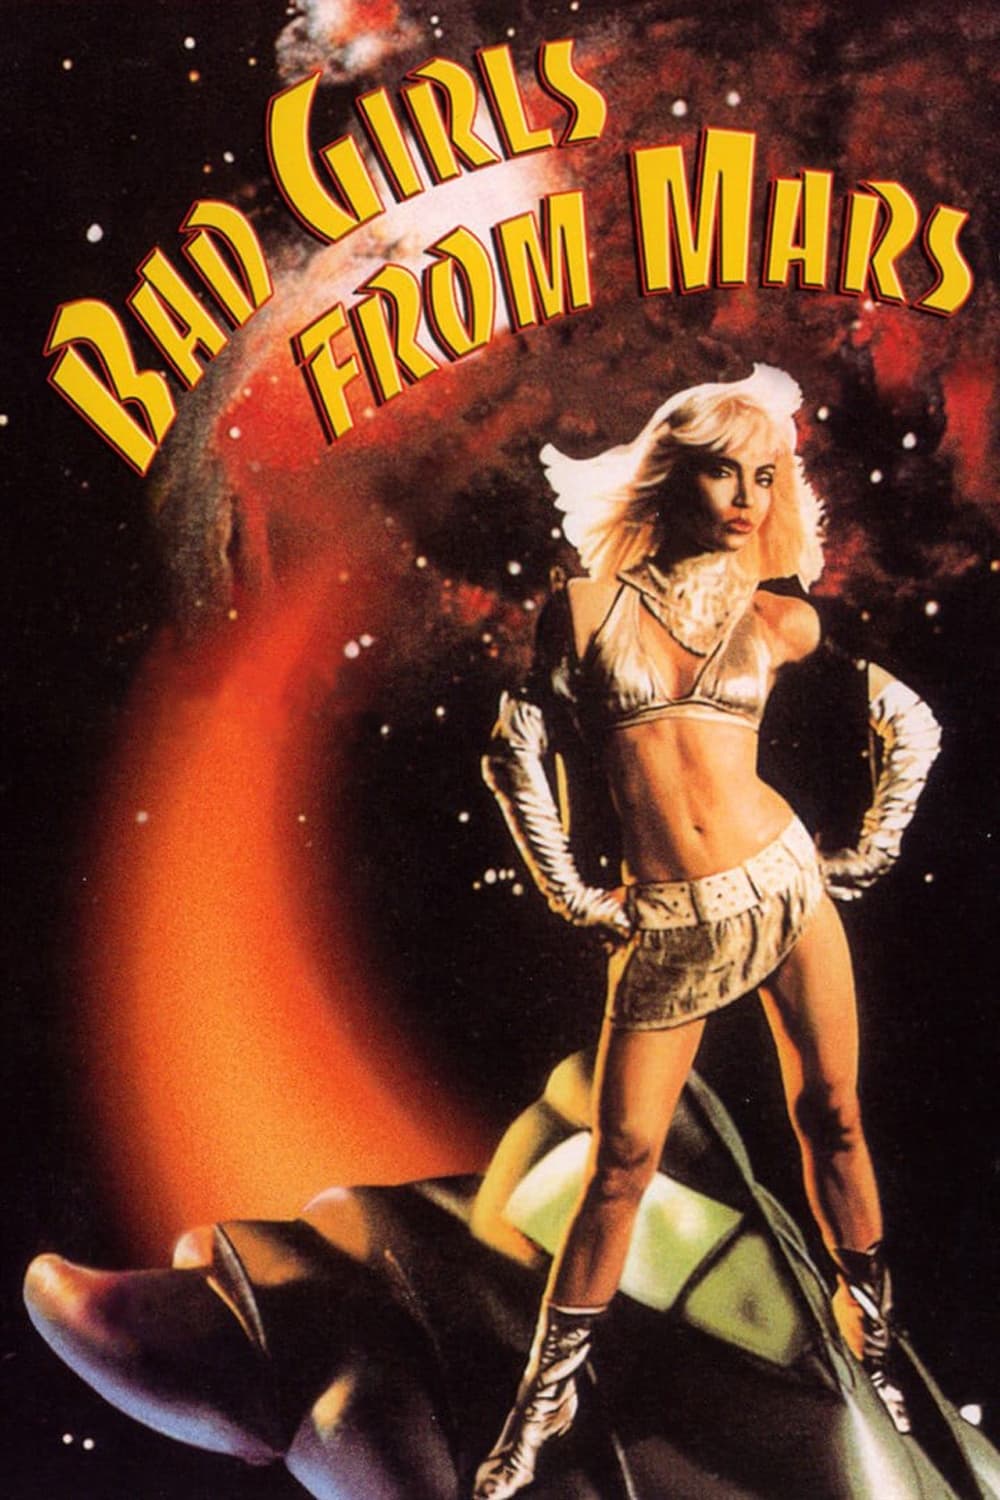 Bad Girls from Mars (1990)